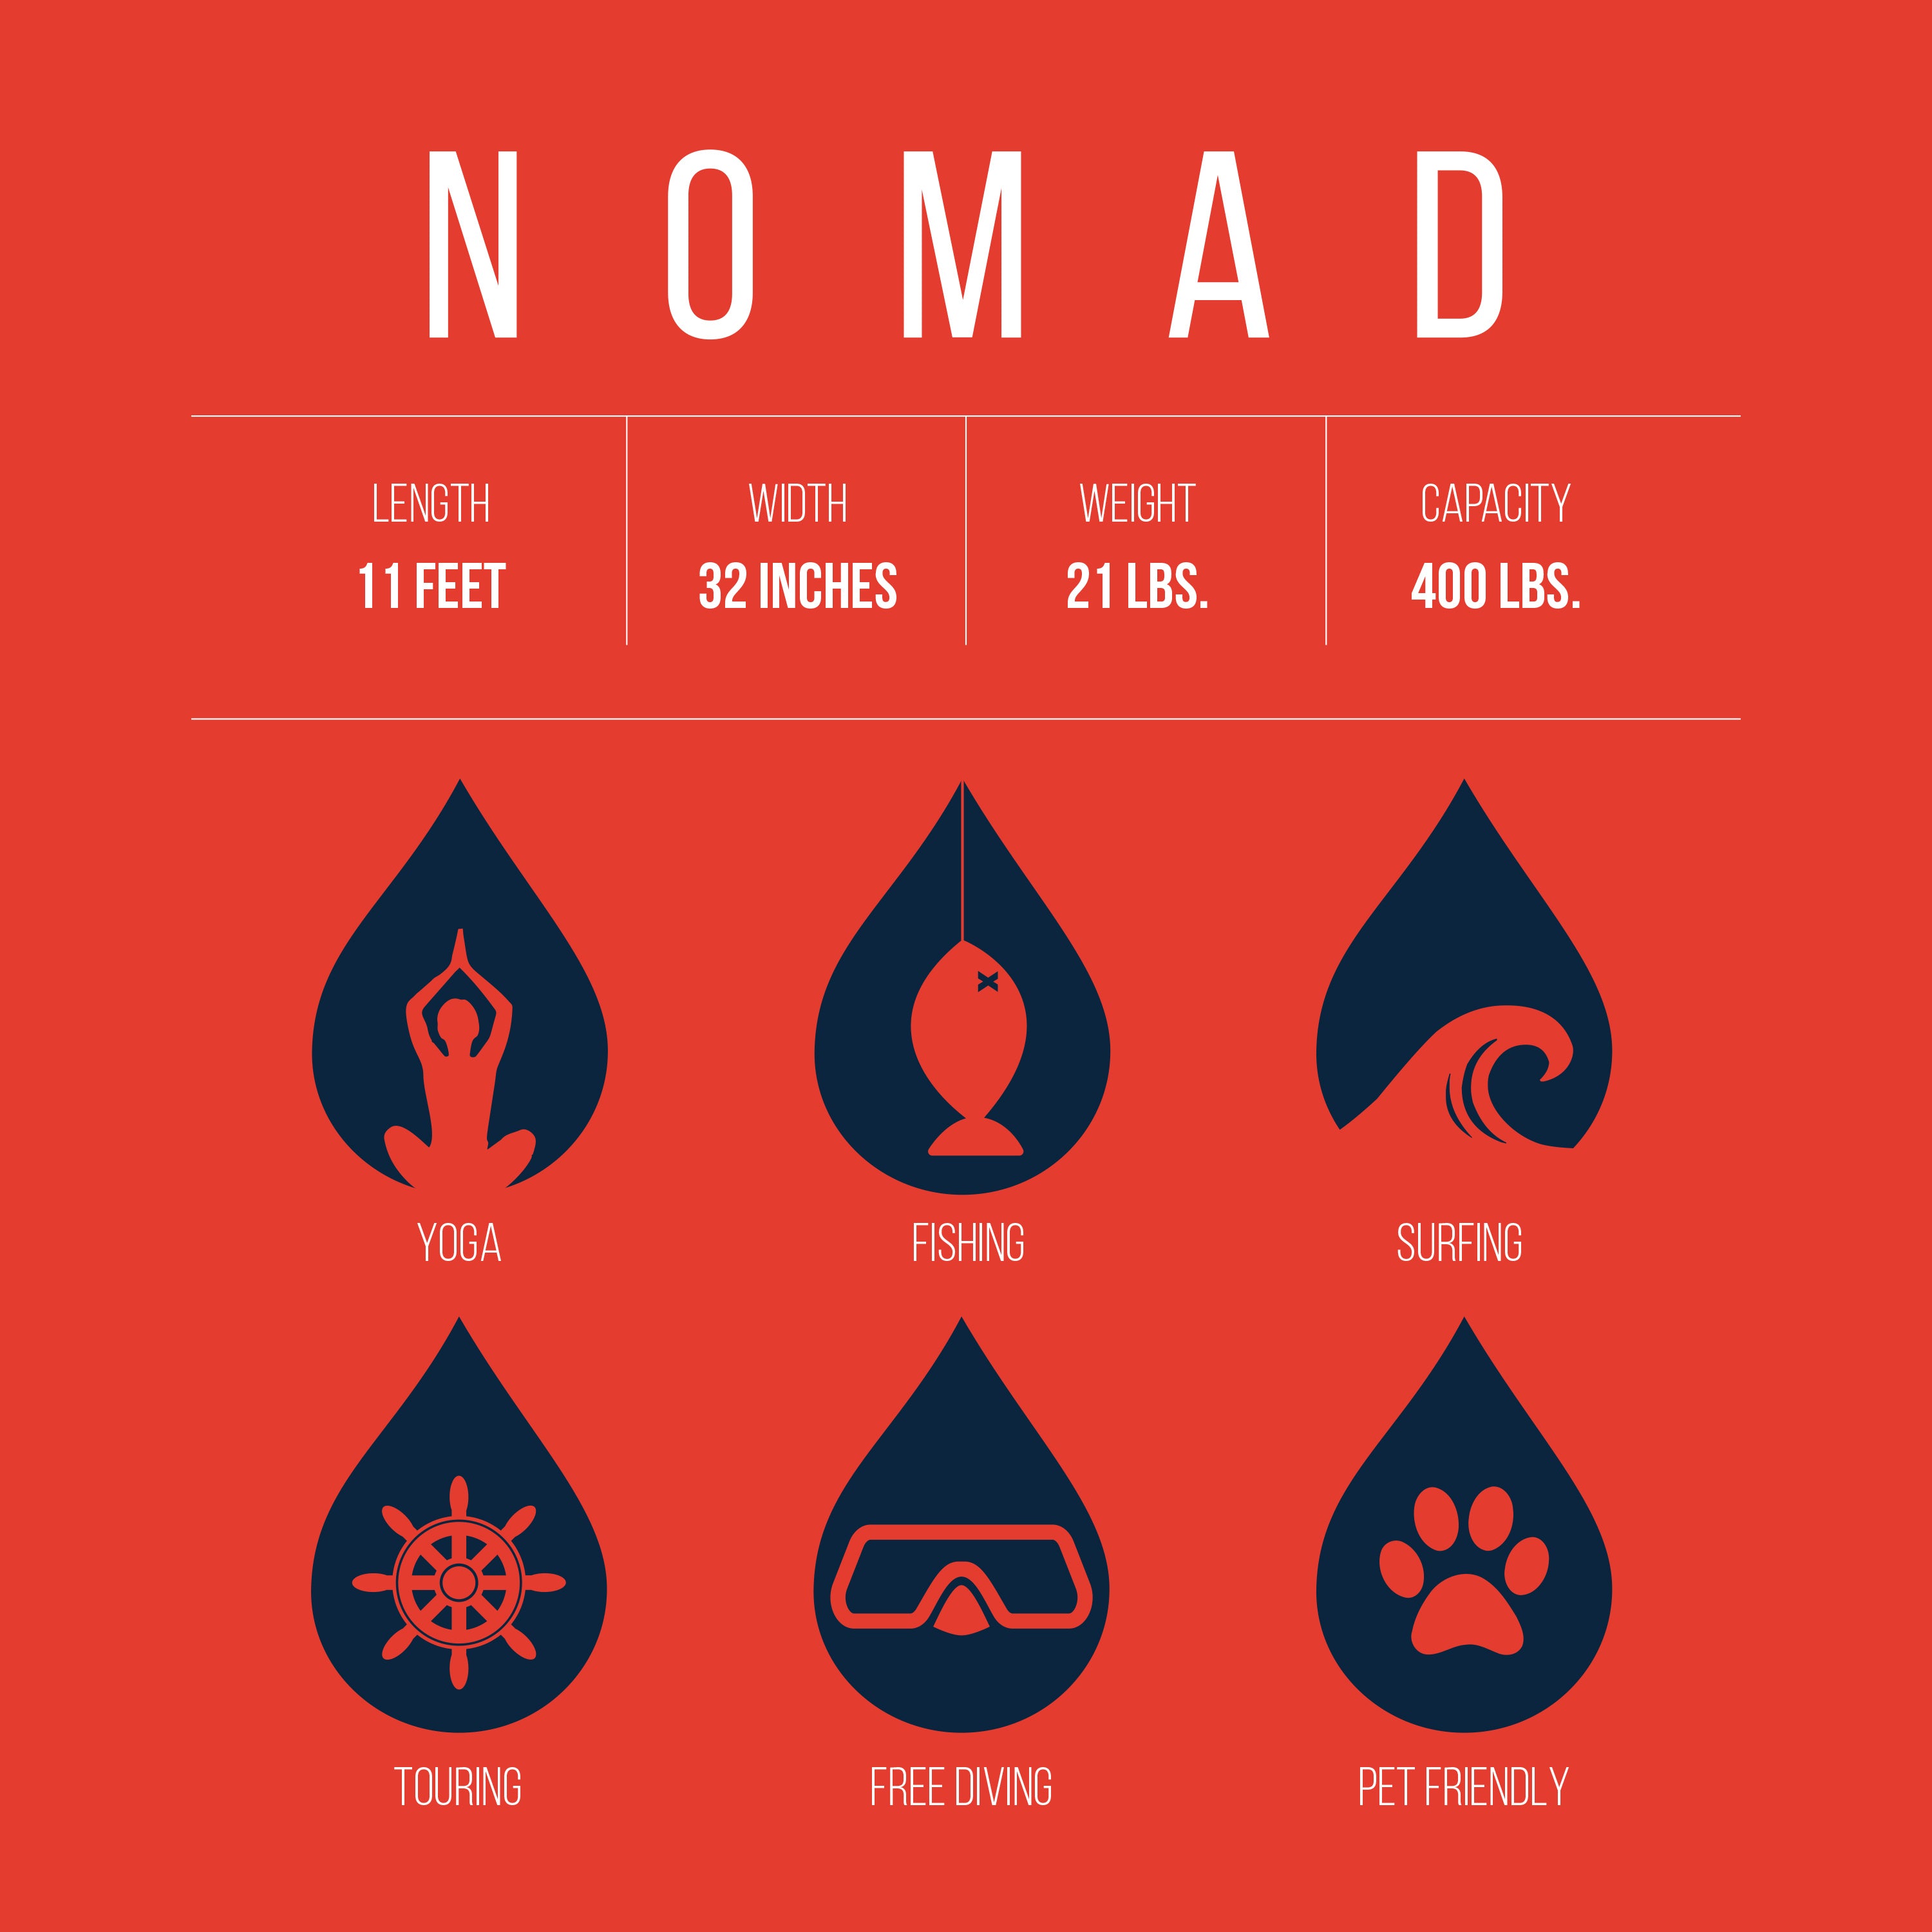 Nomad – White